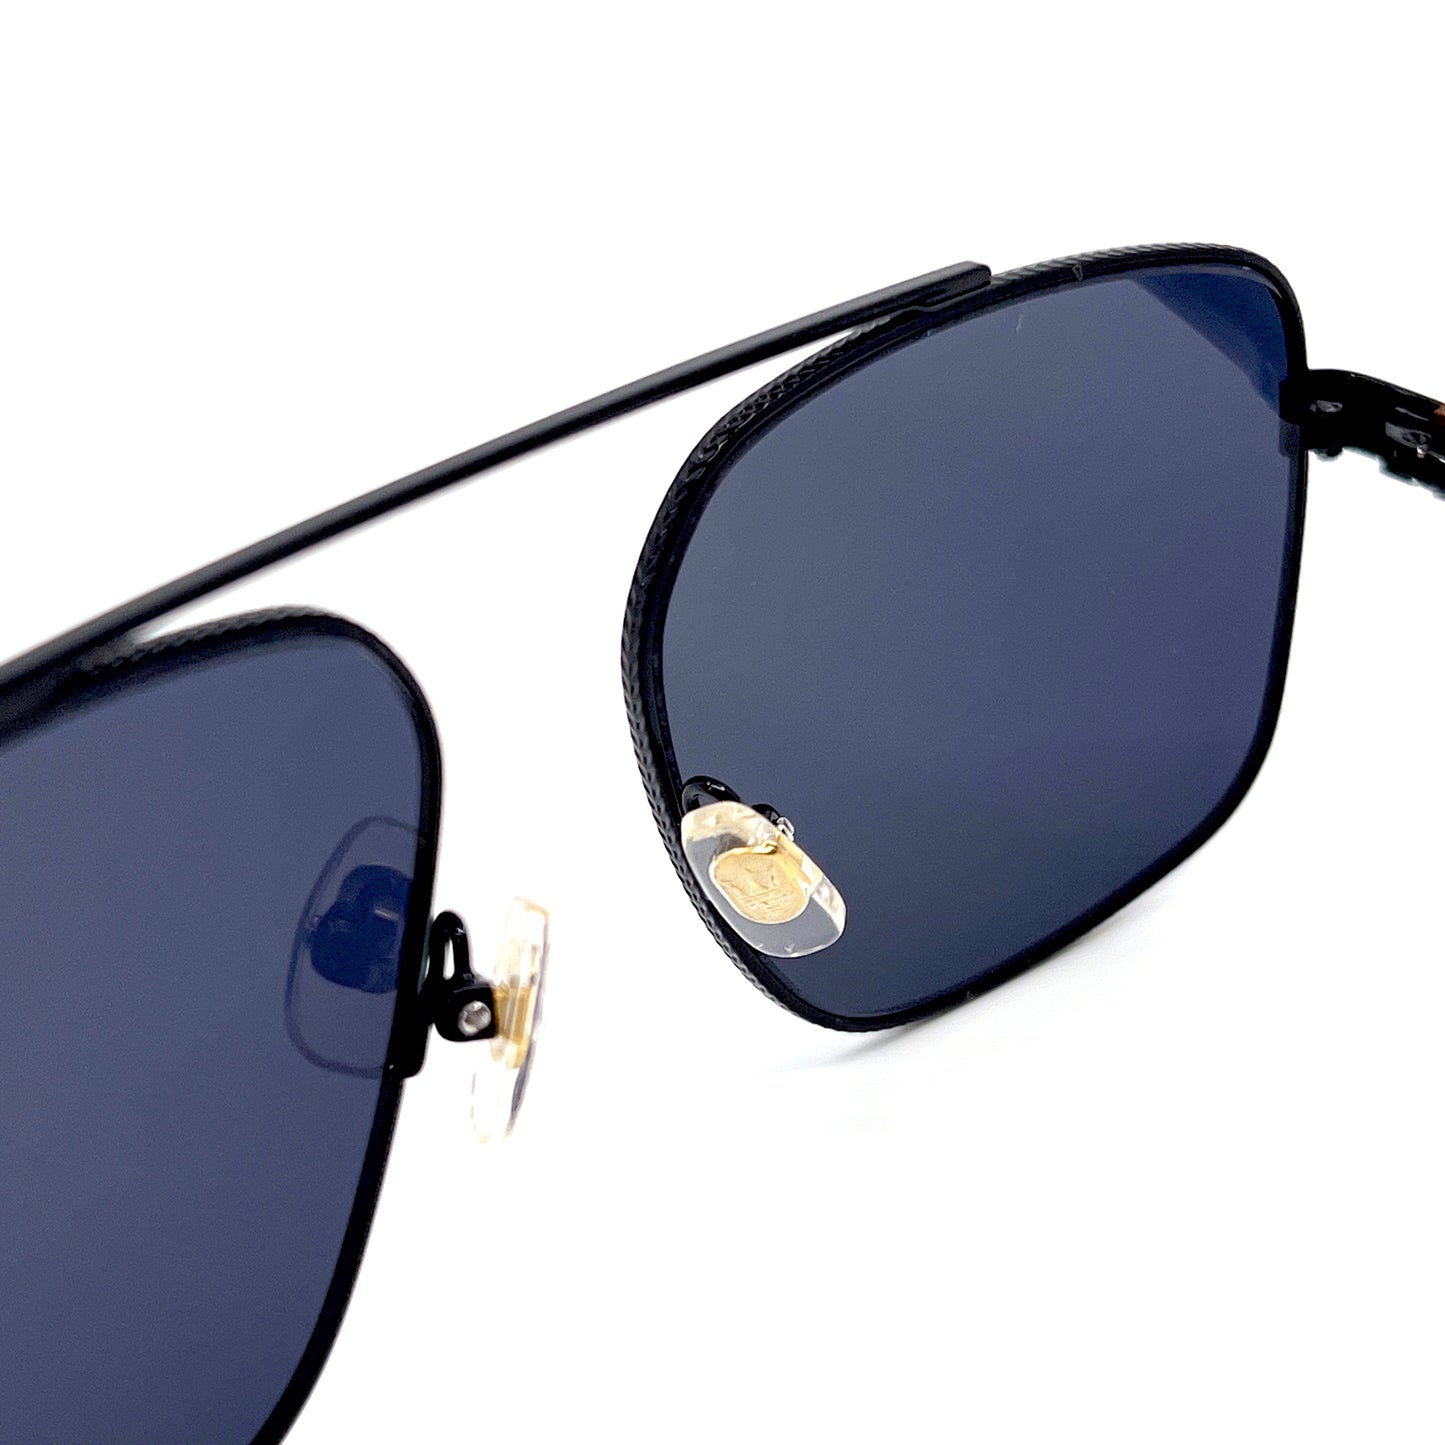 MASERATI Sunglasses MS502 01